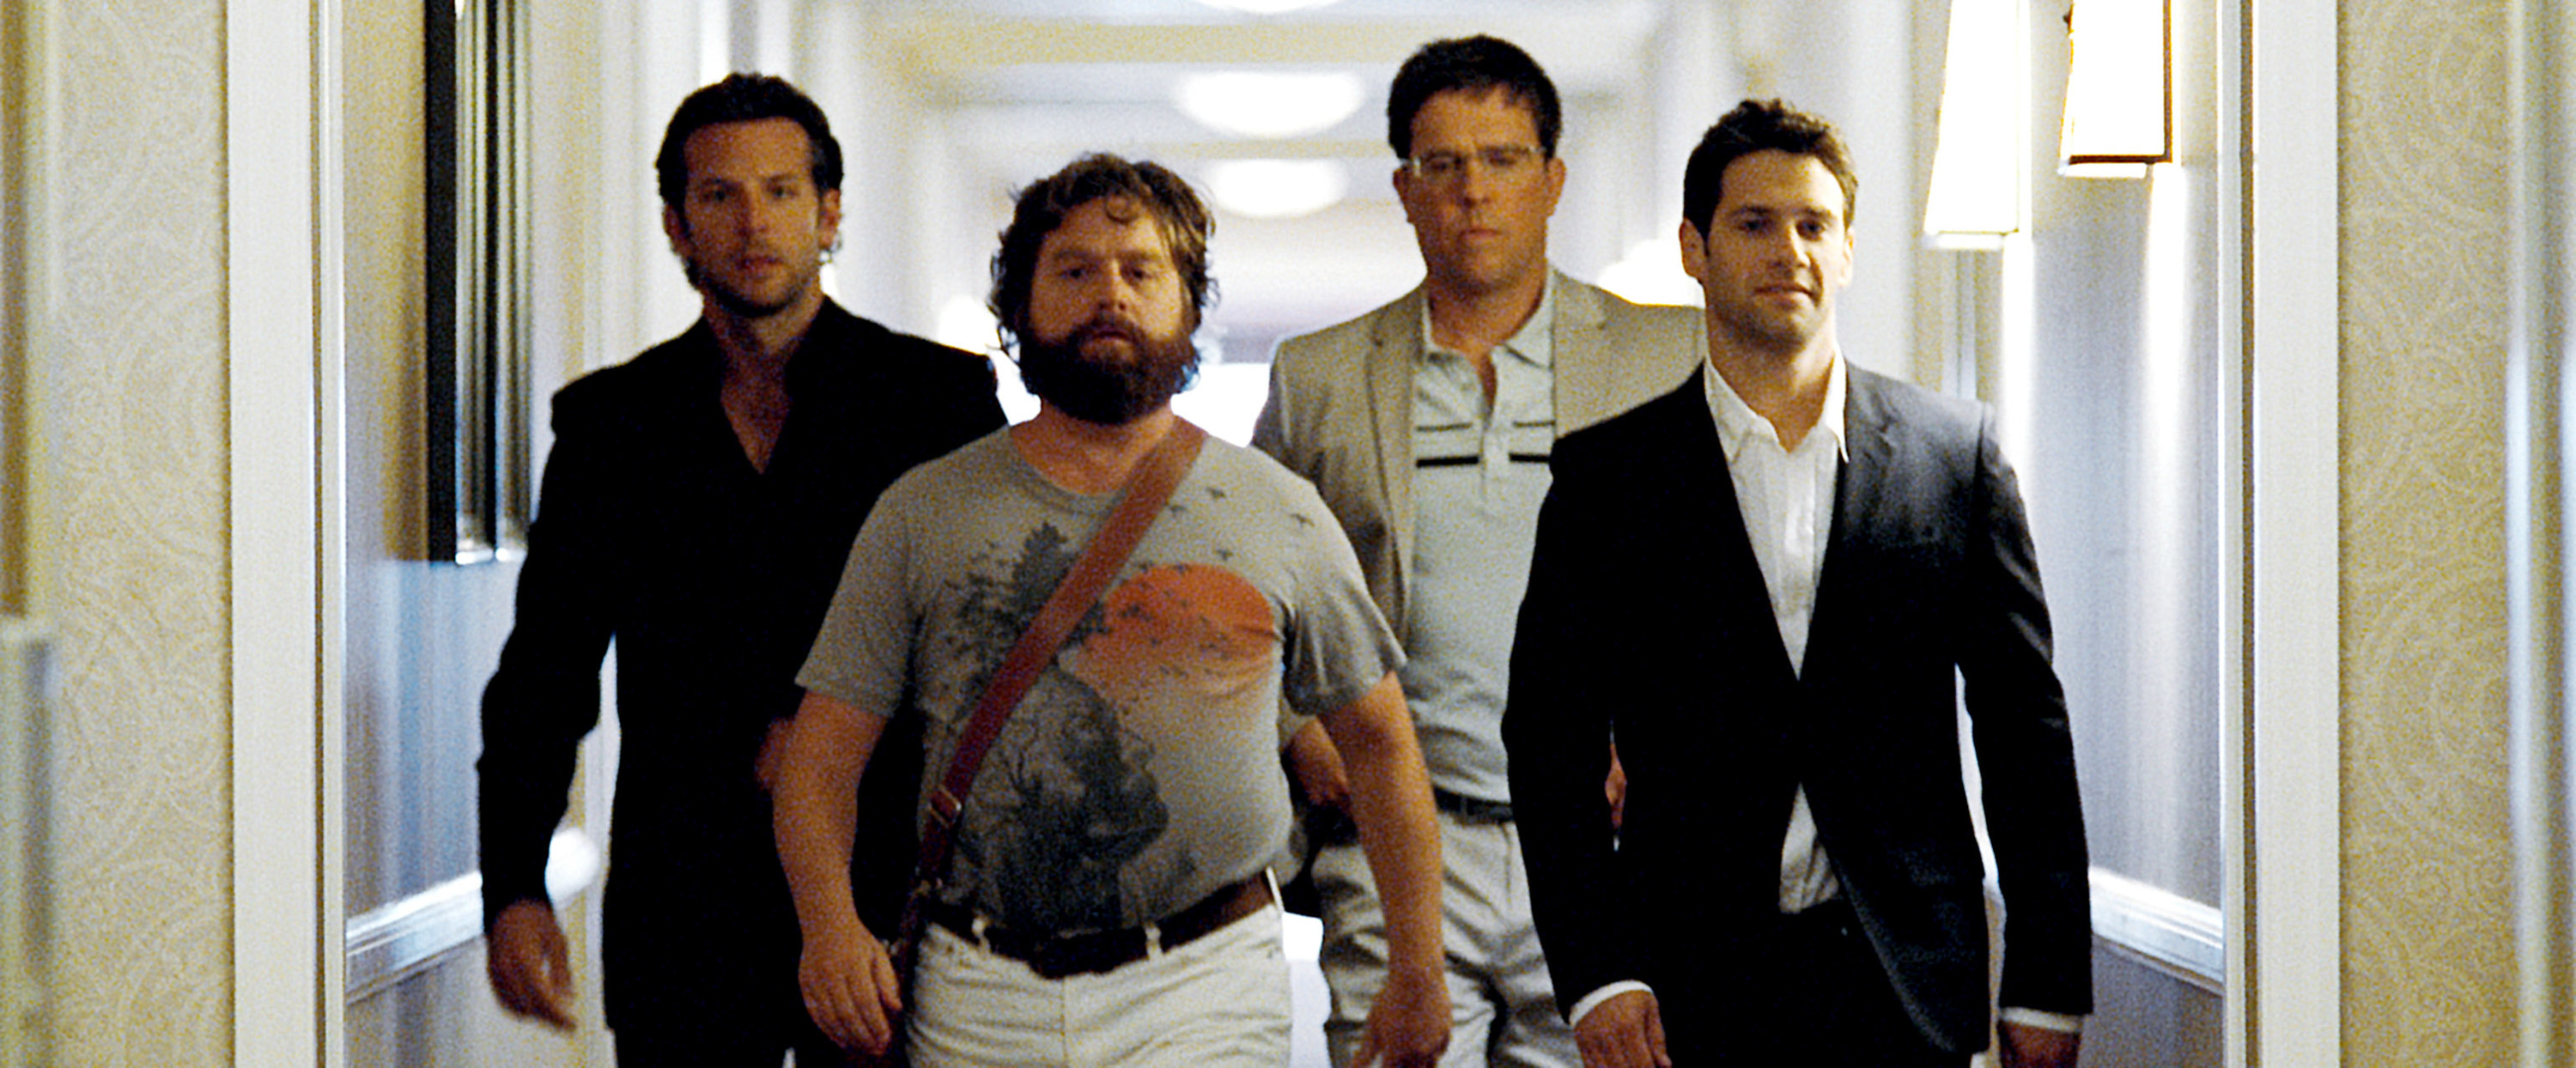 A group of four men walk down a hallway